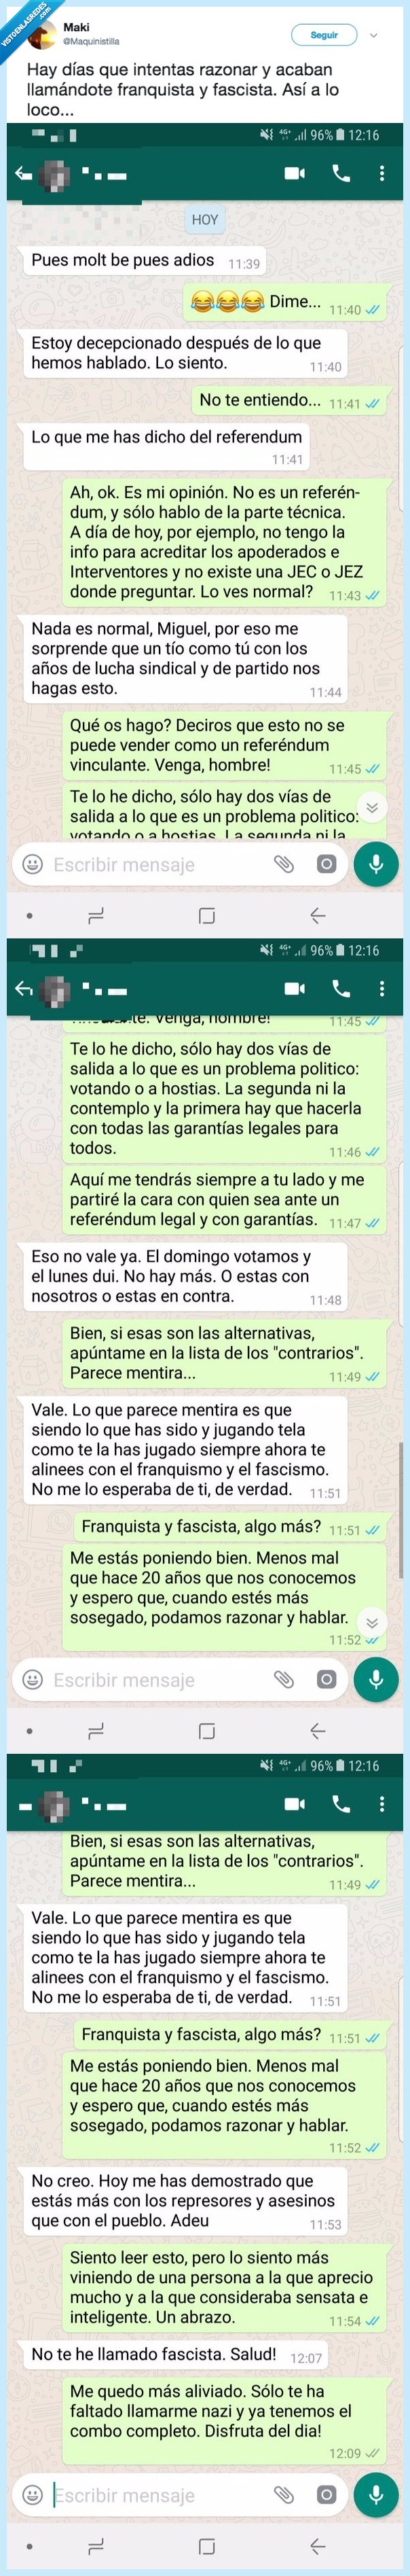 whatasapp,nazí,referendum